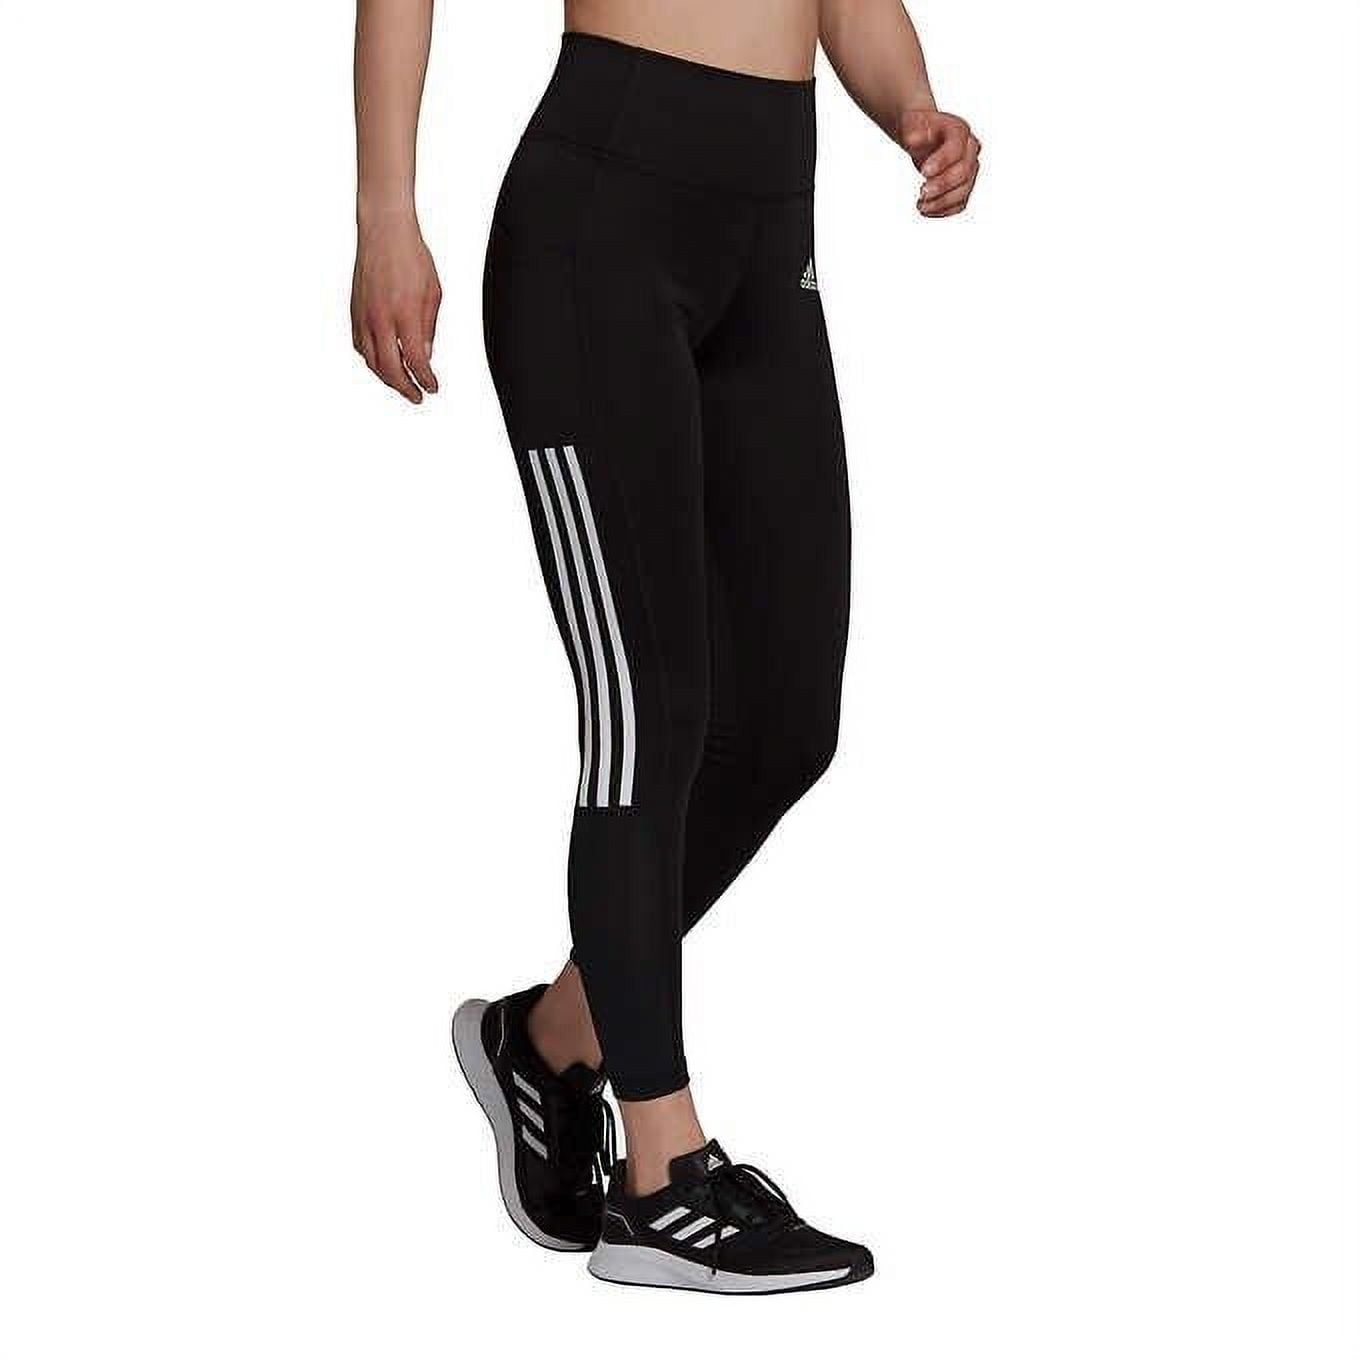 Adidas Aeroready 3-stripe high rise 7/8 ankle leggings NWT womens